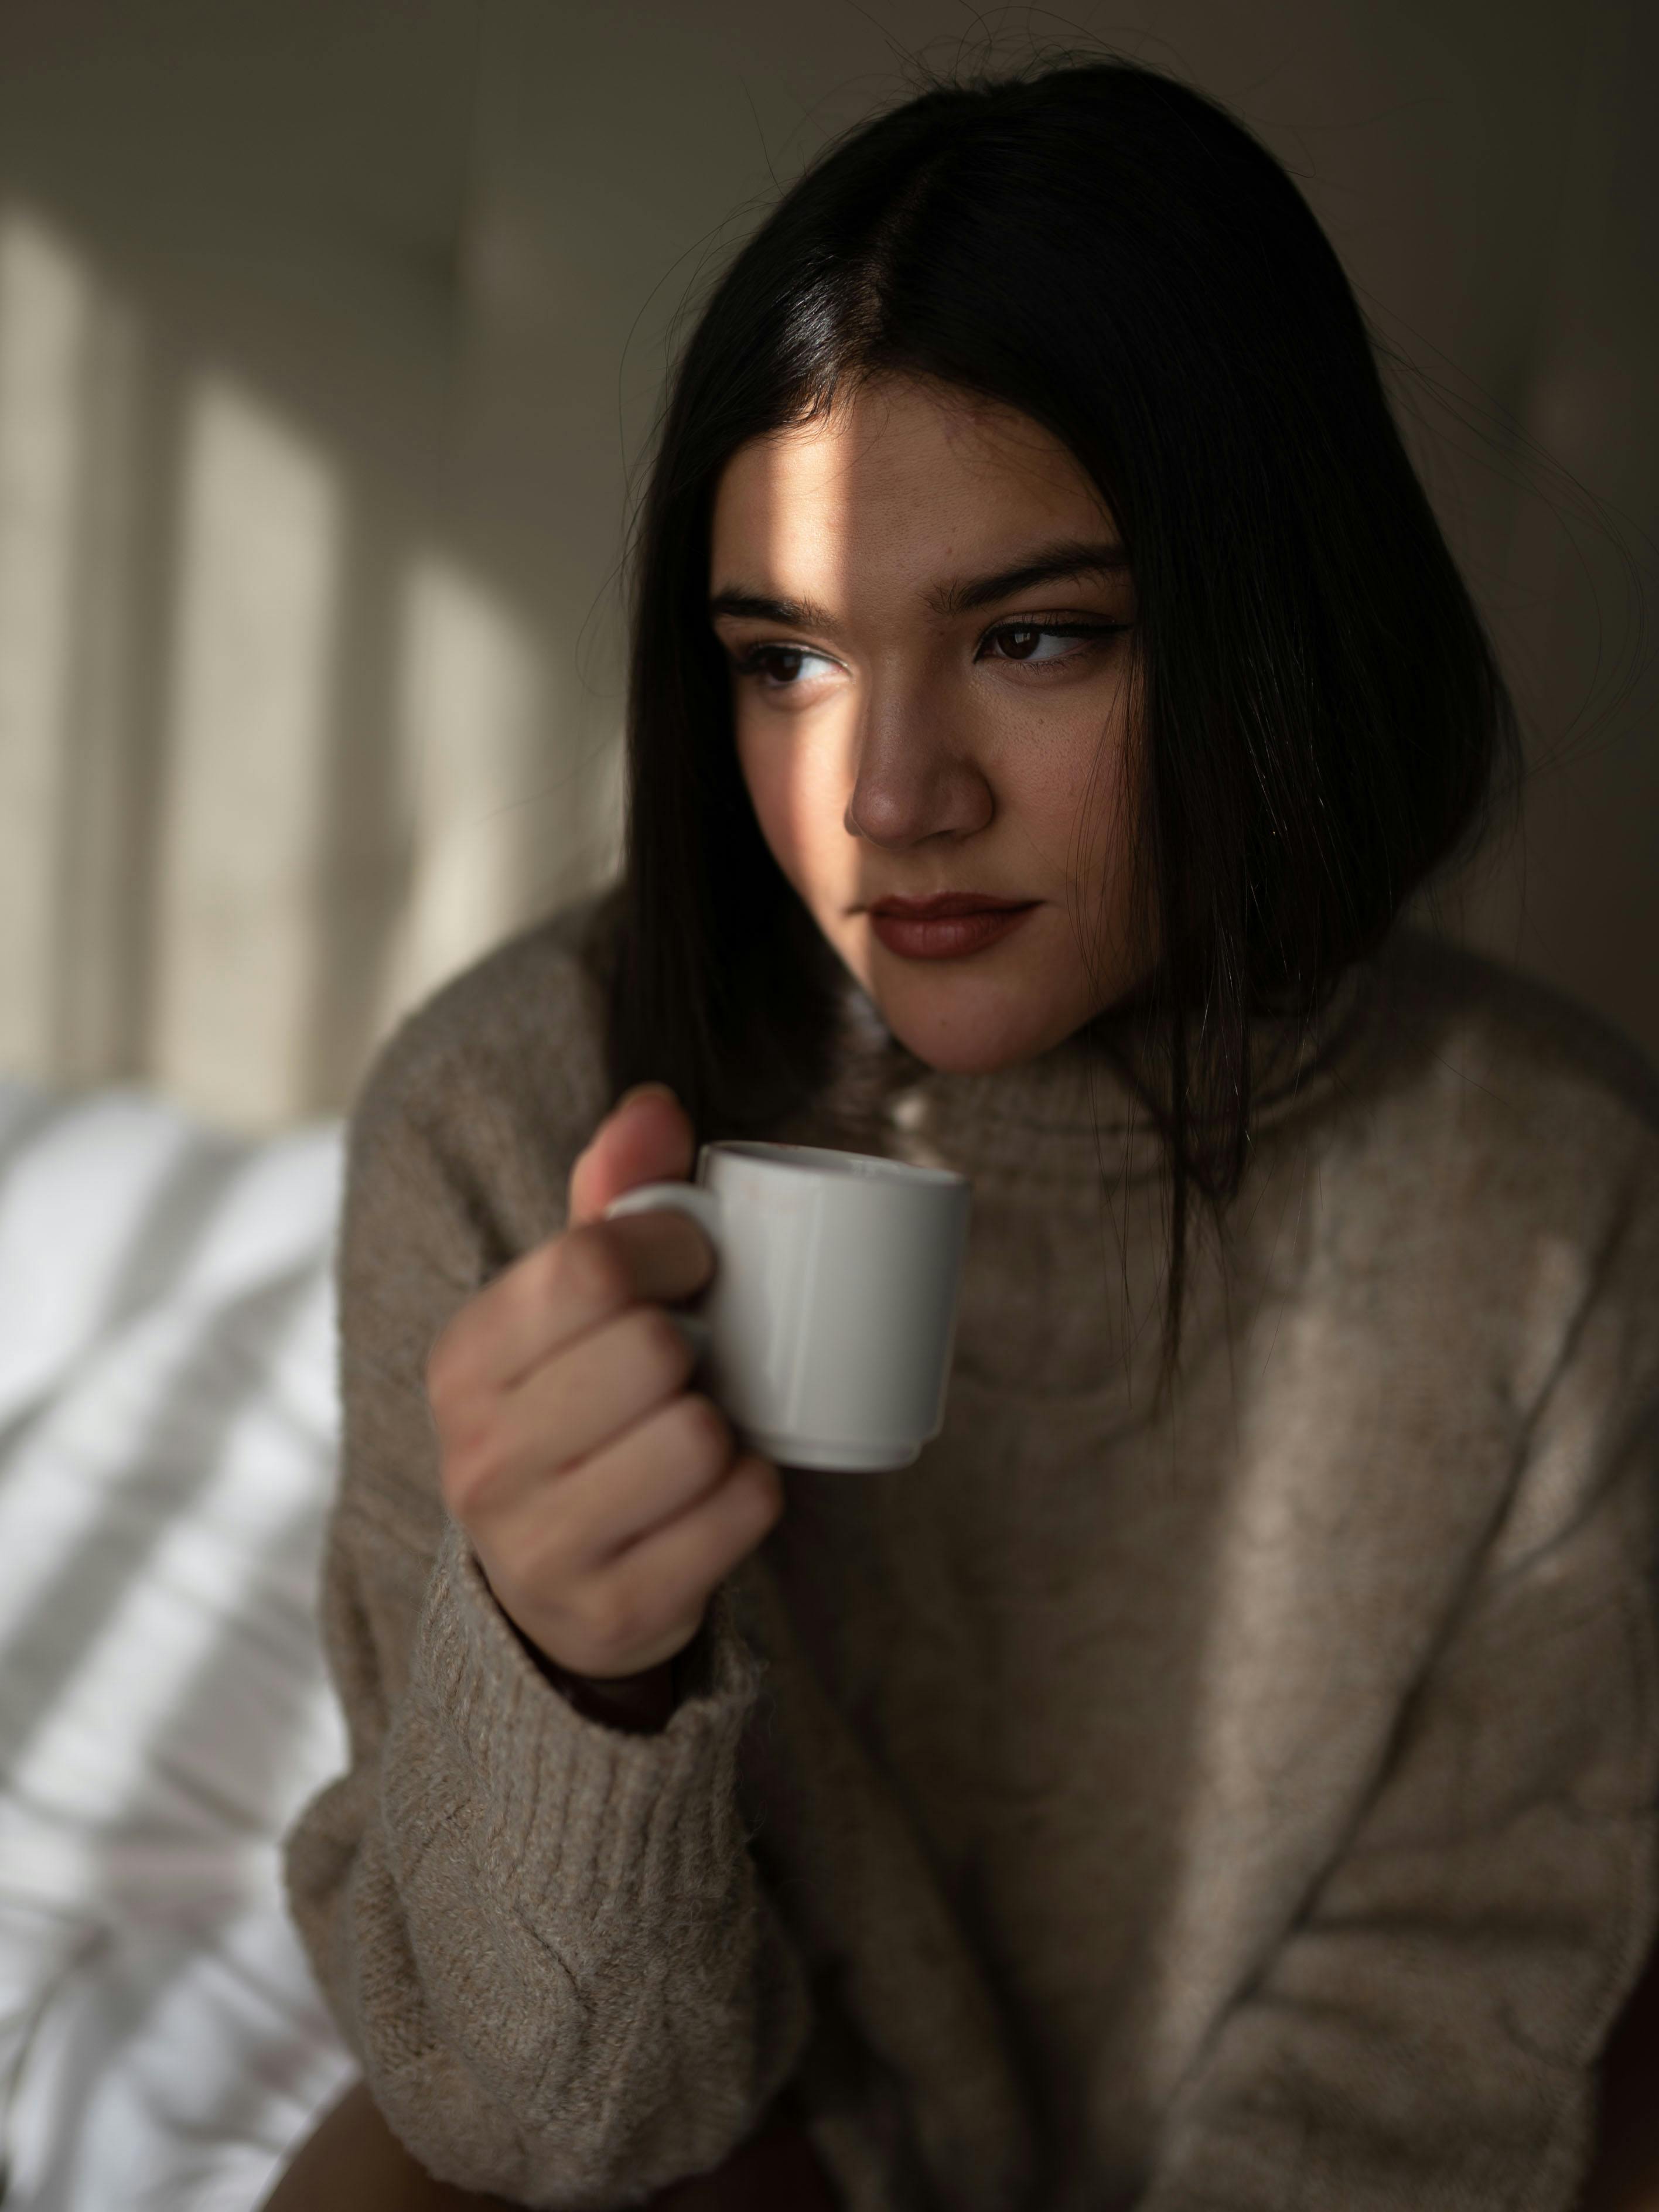 Thoughtful young woman drinking coffee near window on gloomy day · Free ...